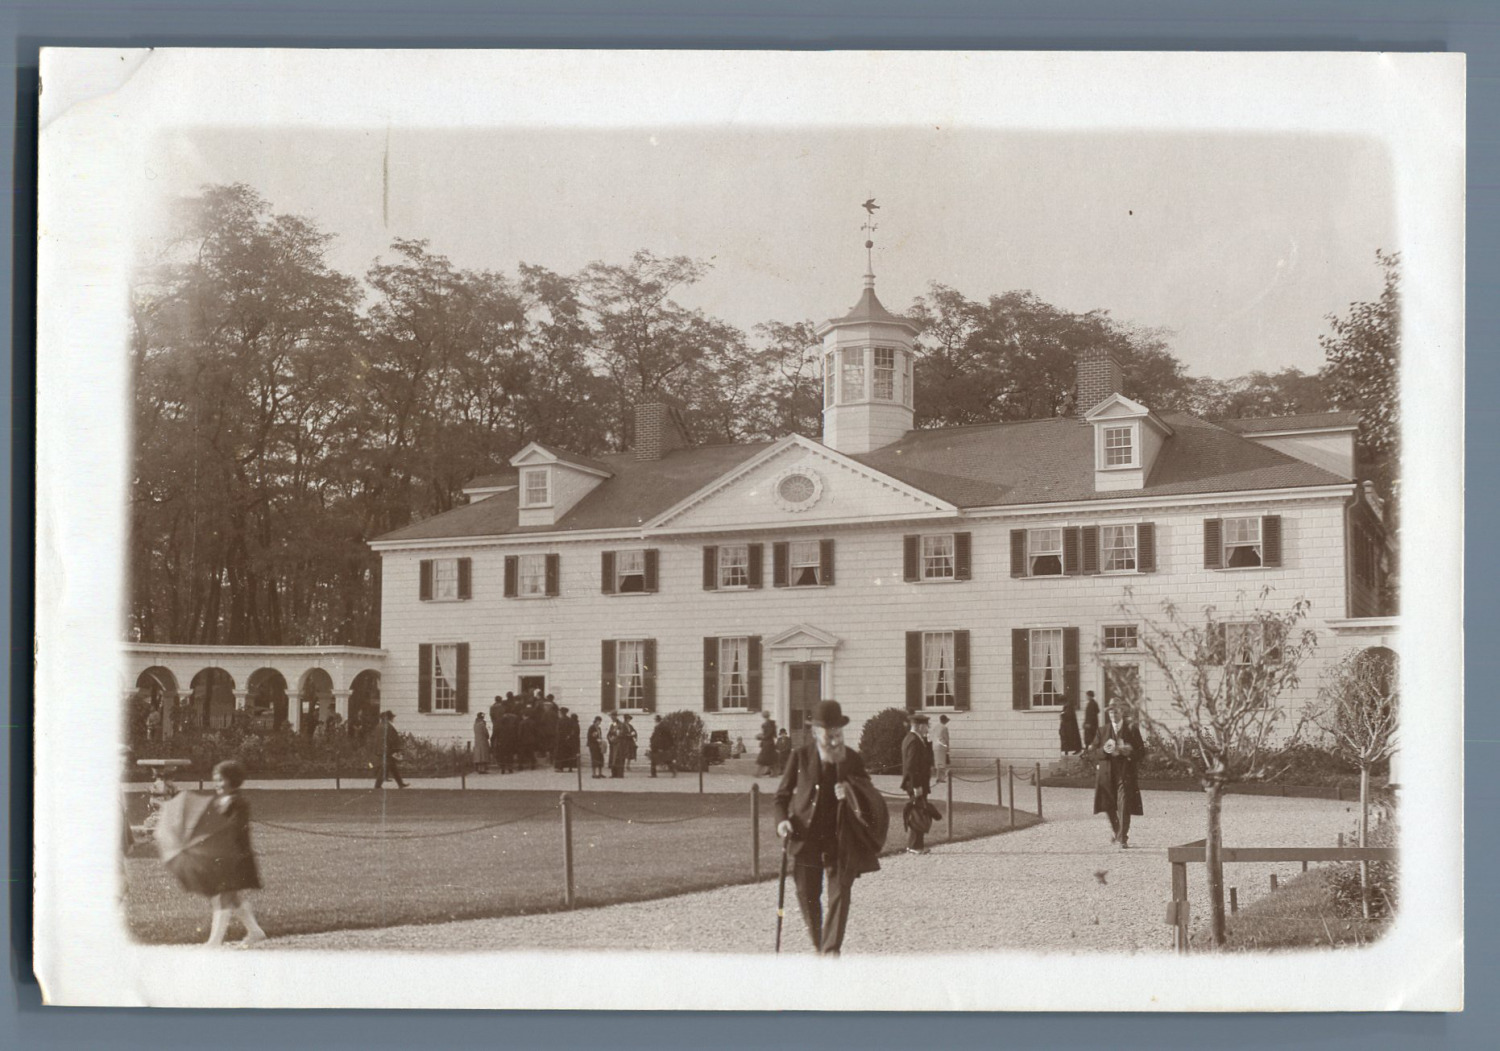 France, 1931 International Colonial Exhibition. Washington Vi Residence